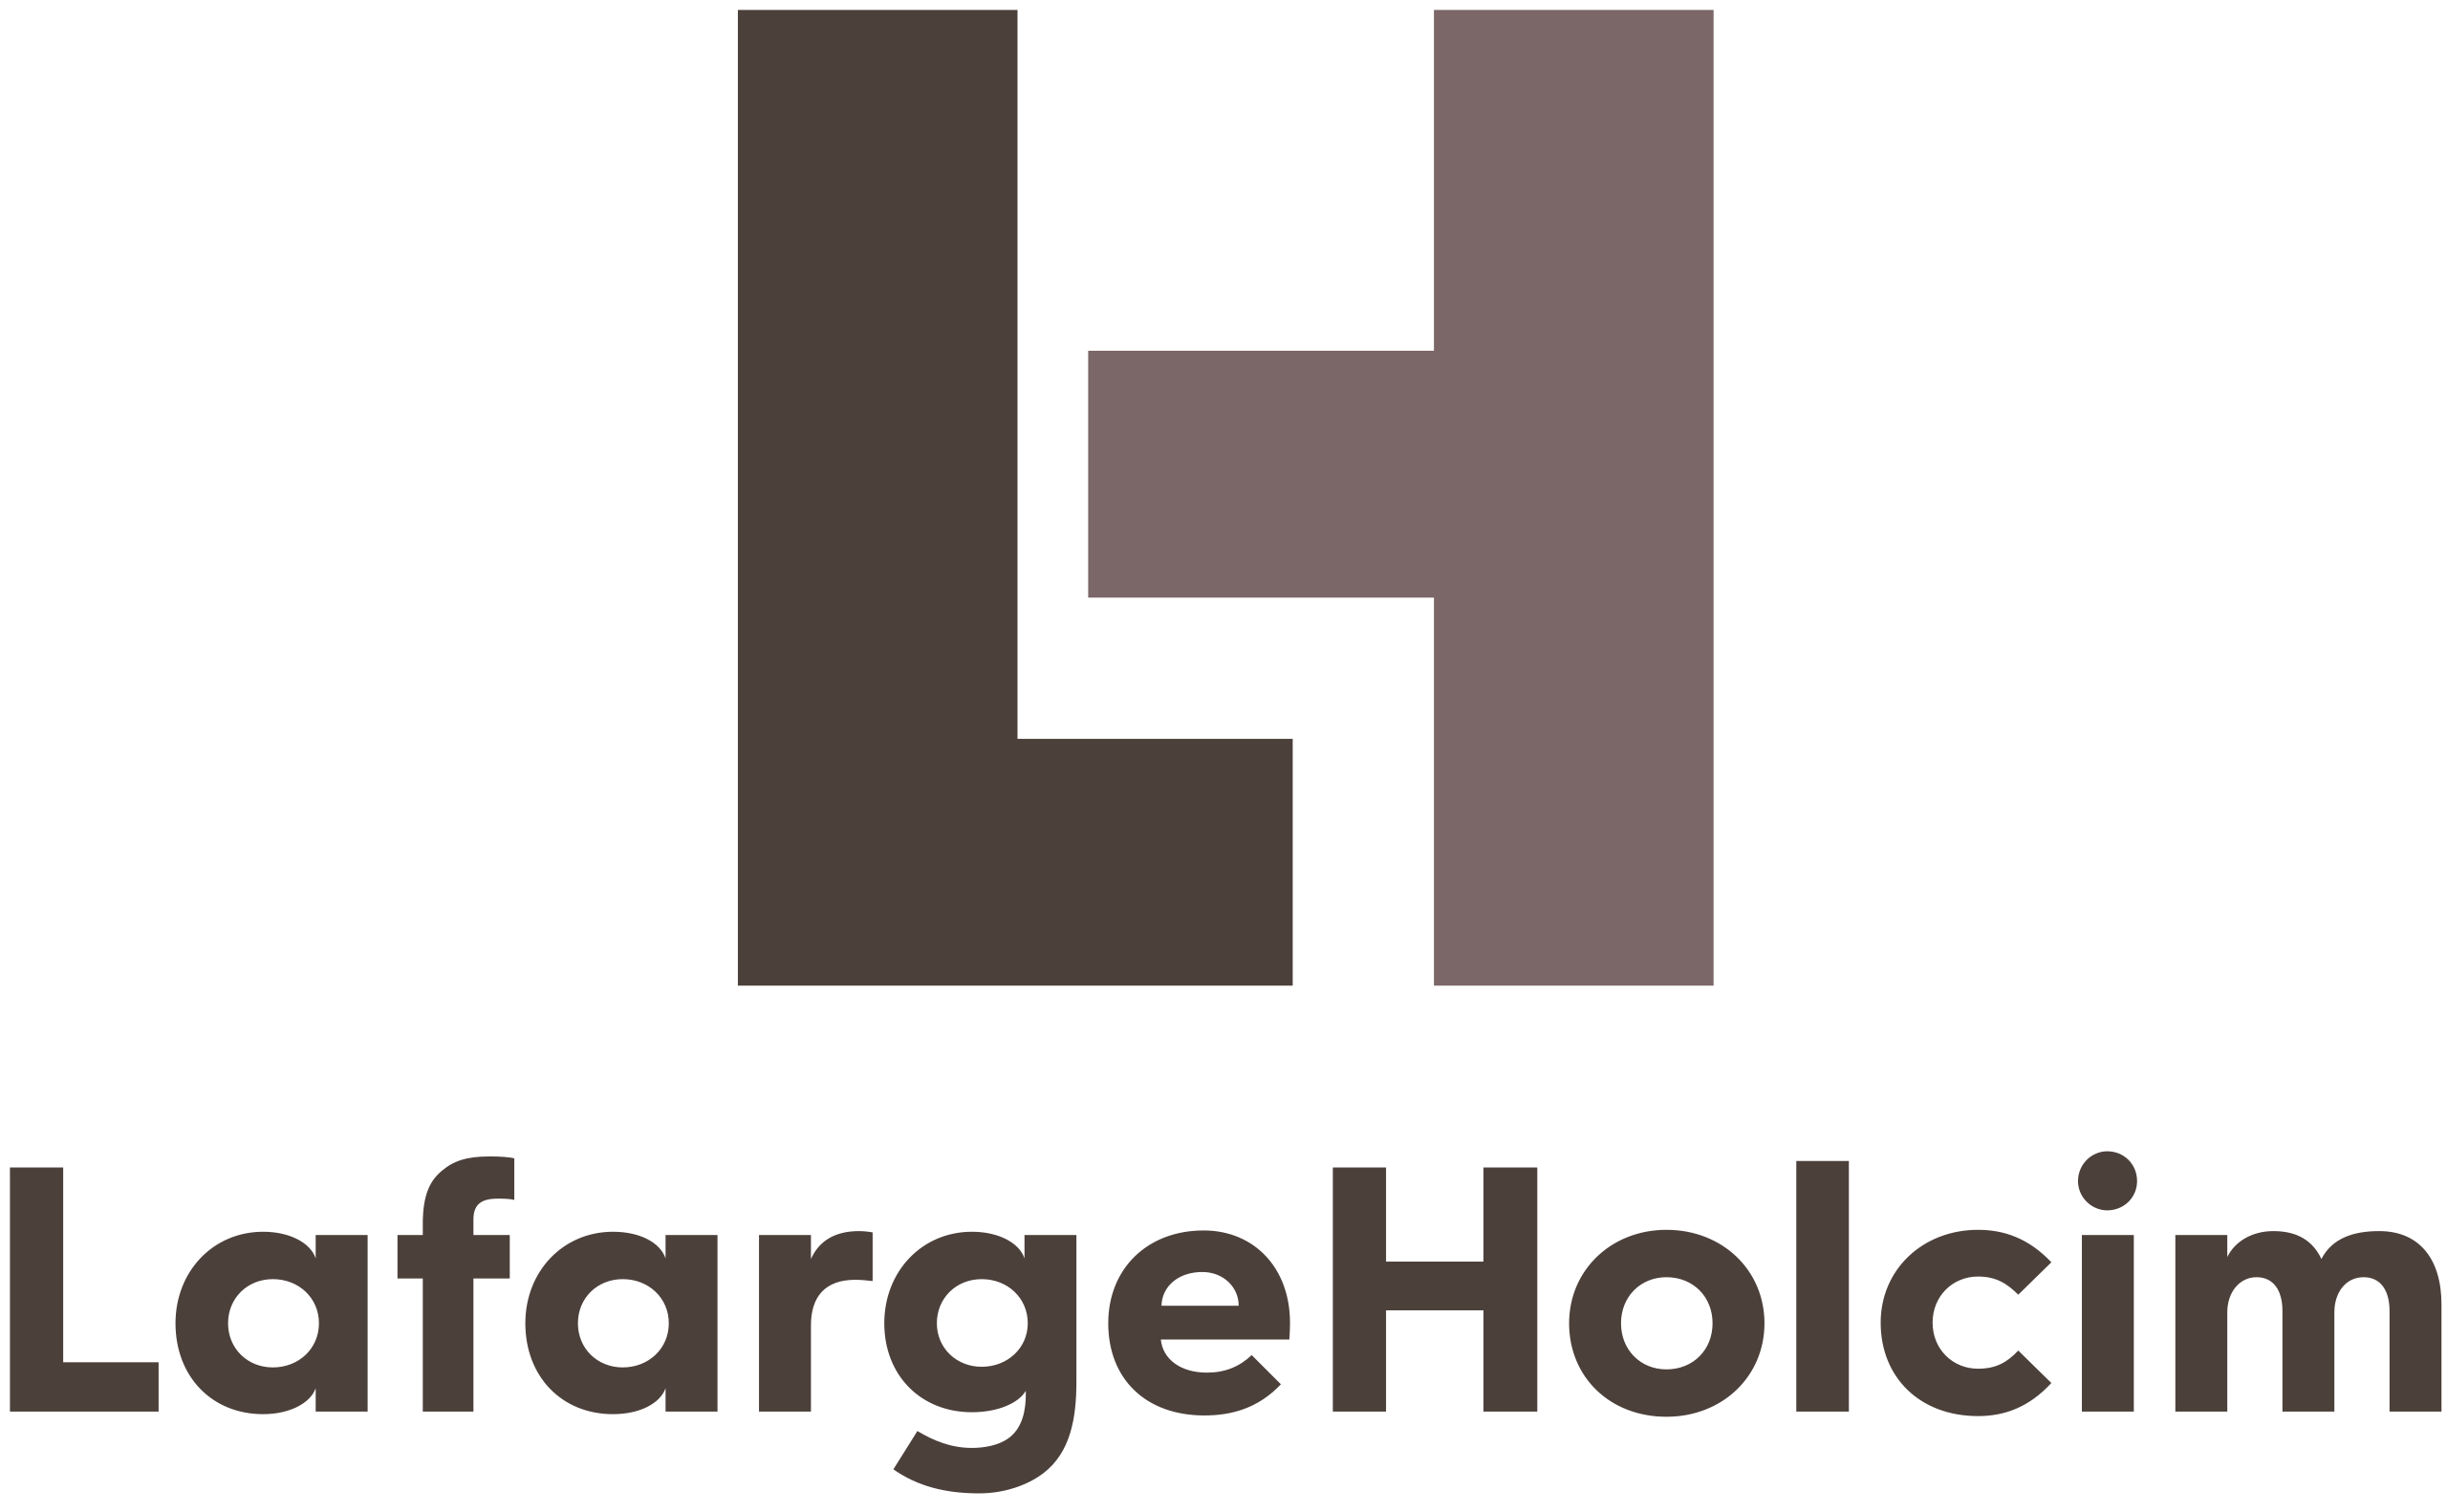 2560px-LafargeHolcim_logo.svg